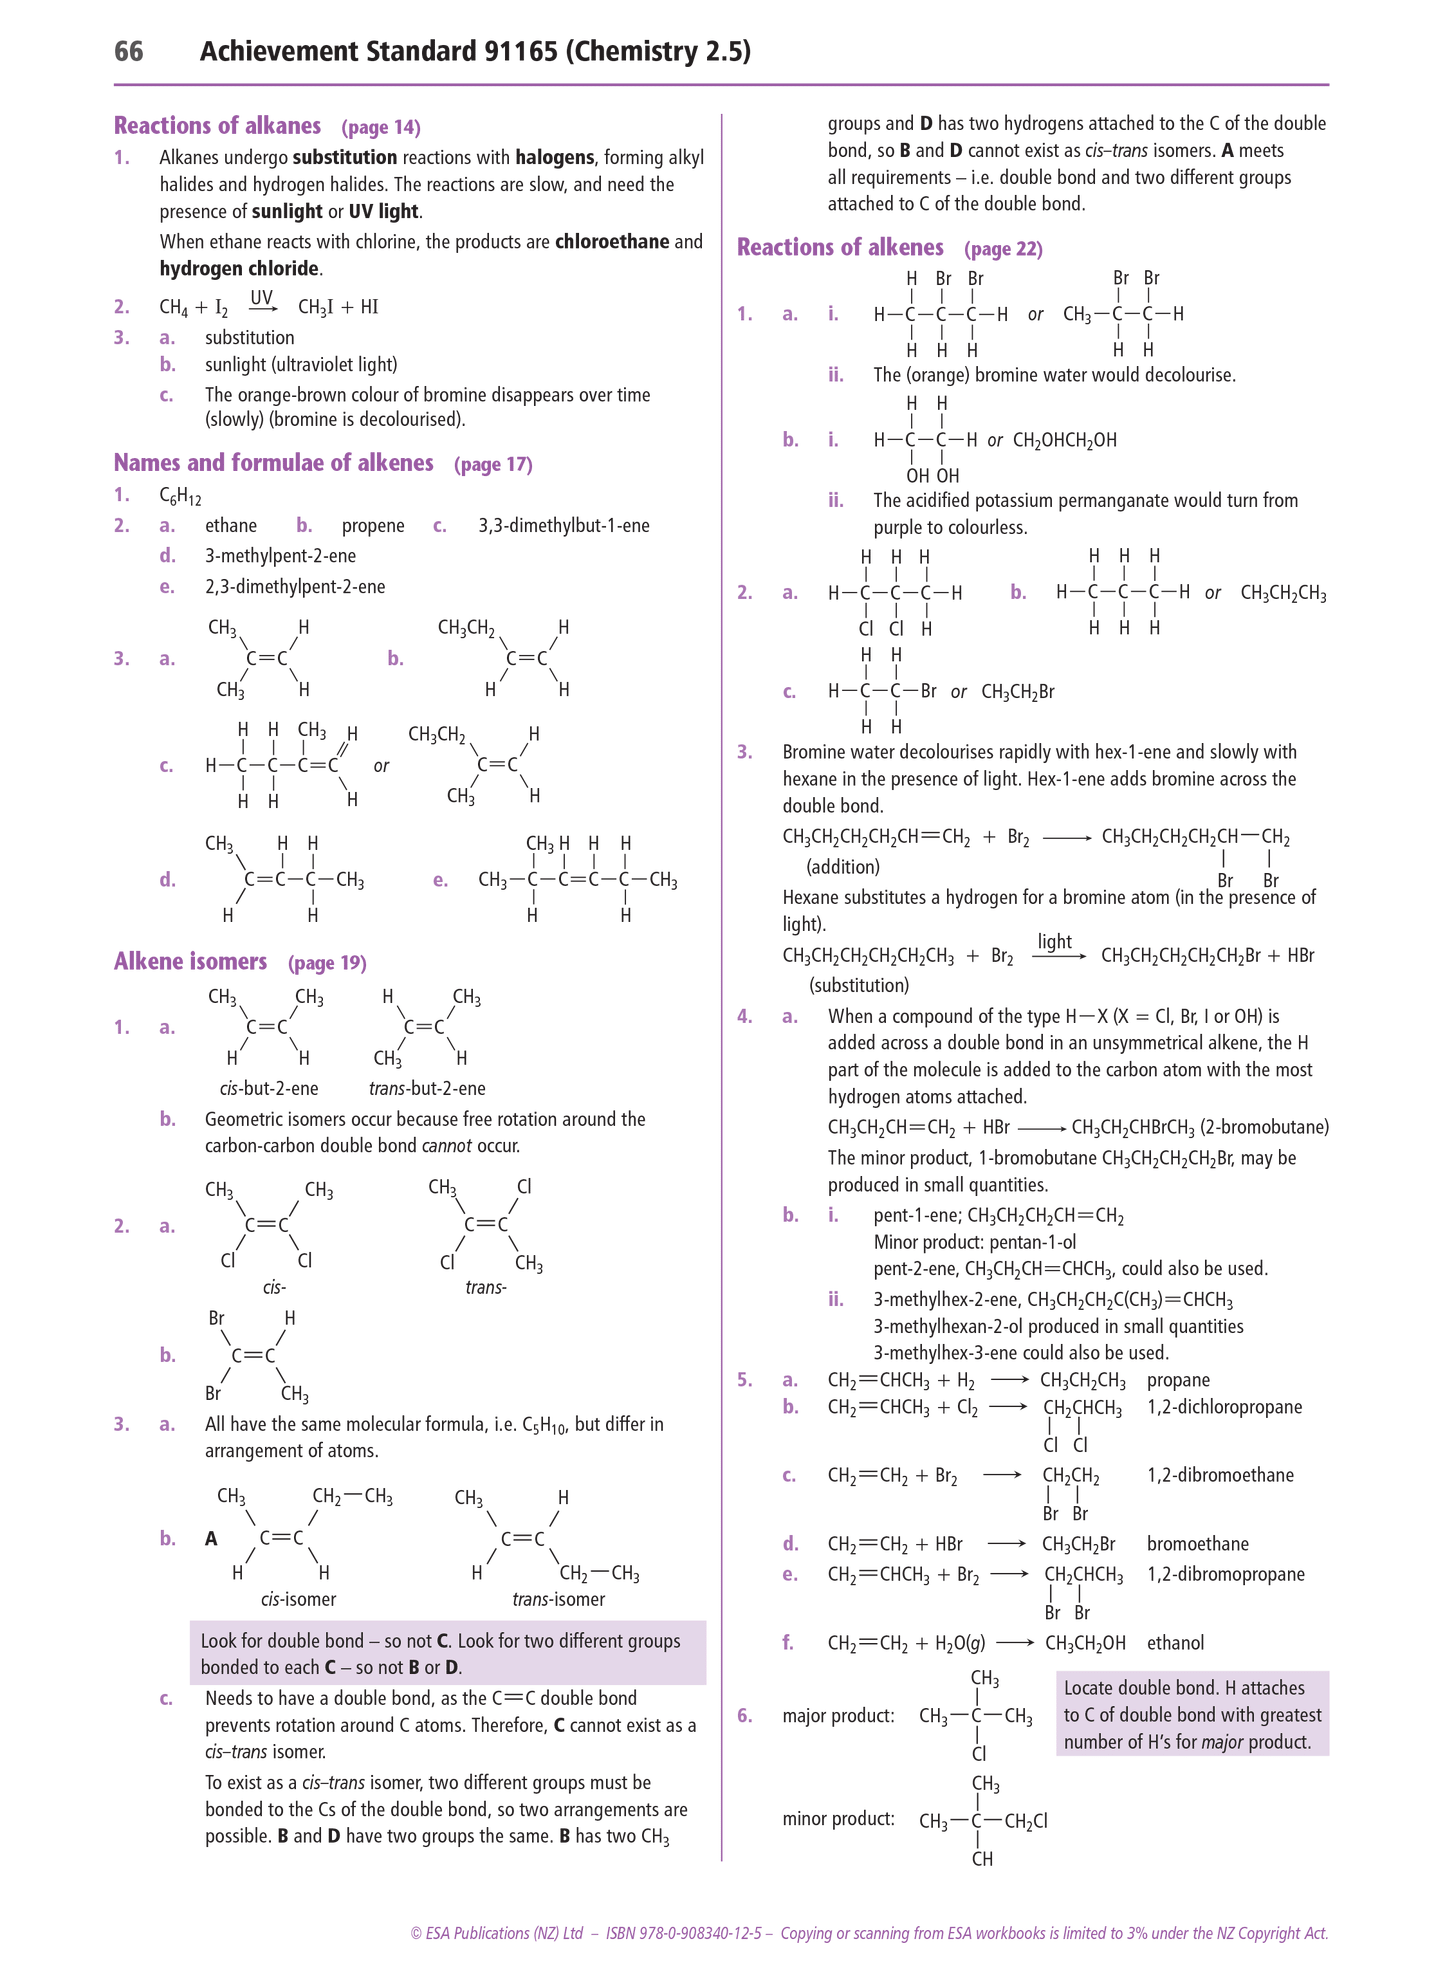 Level 2 Organic Chemistry 2.5 Learning Workbook